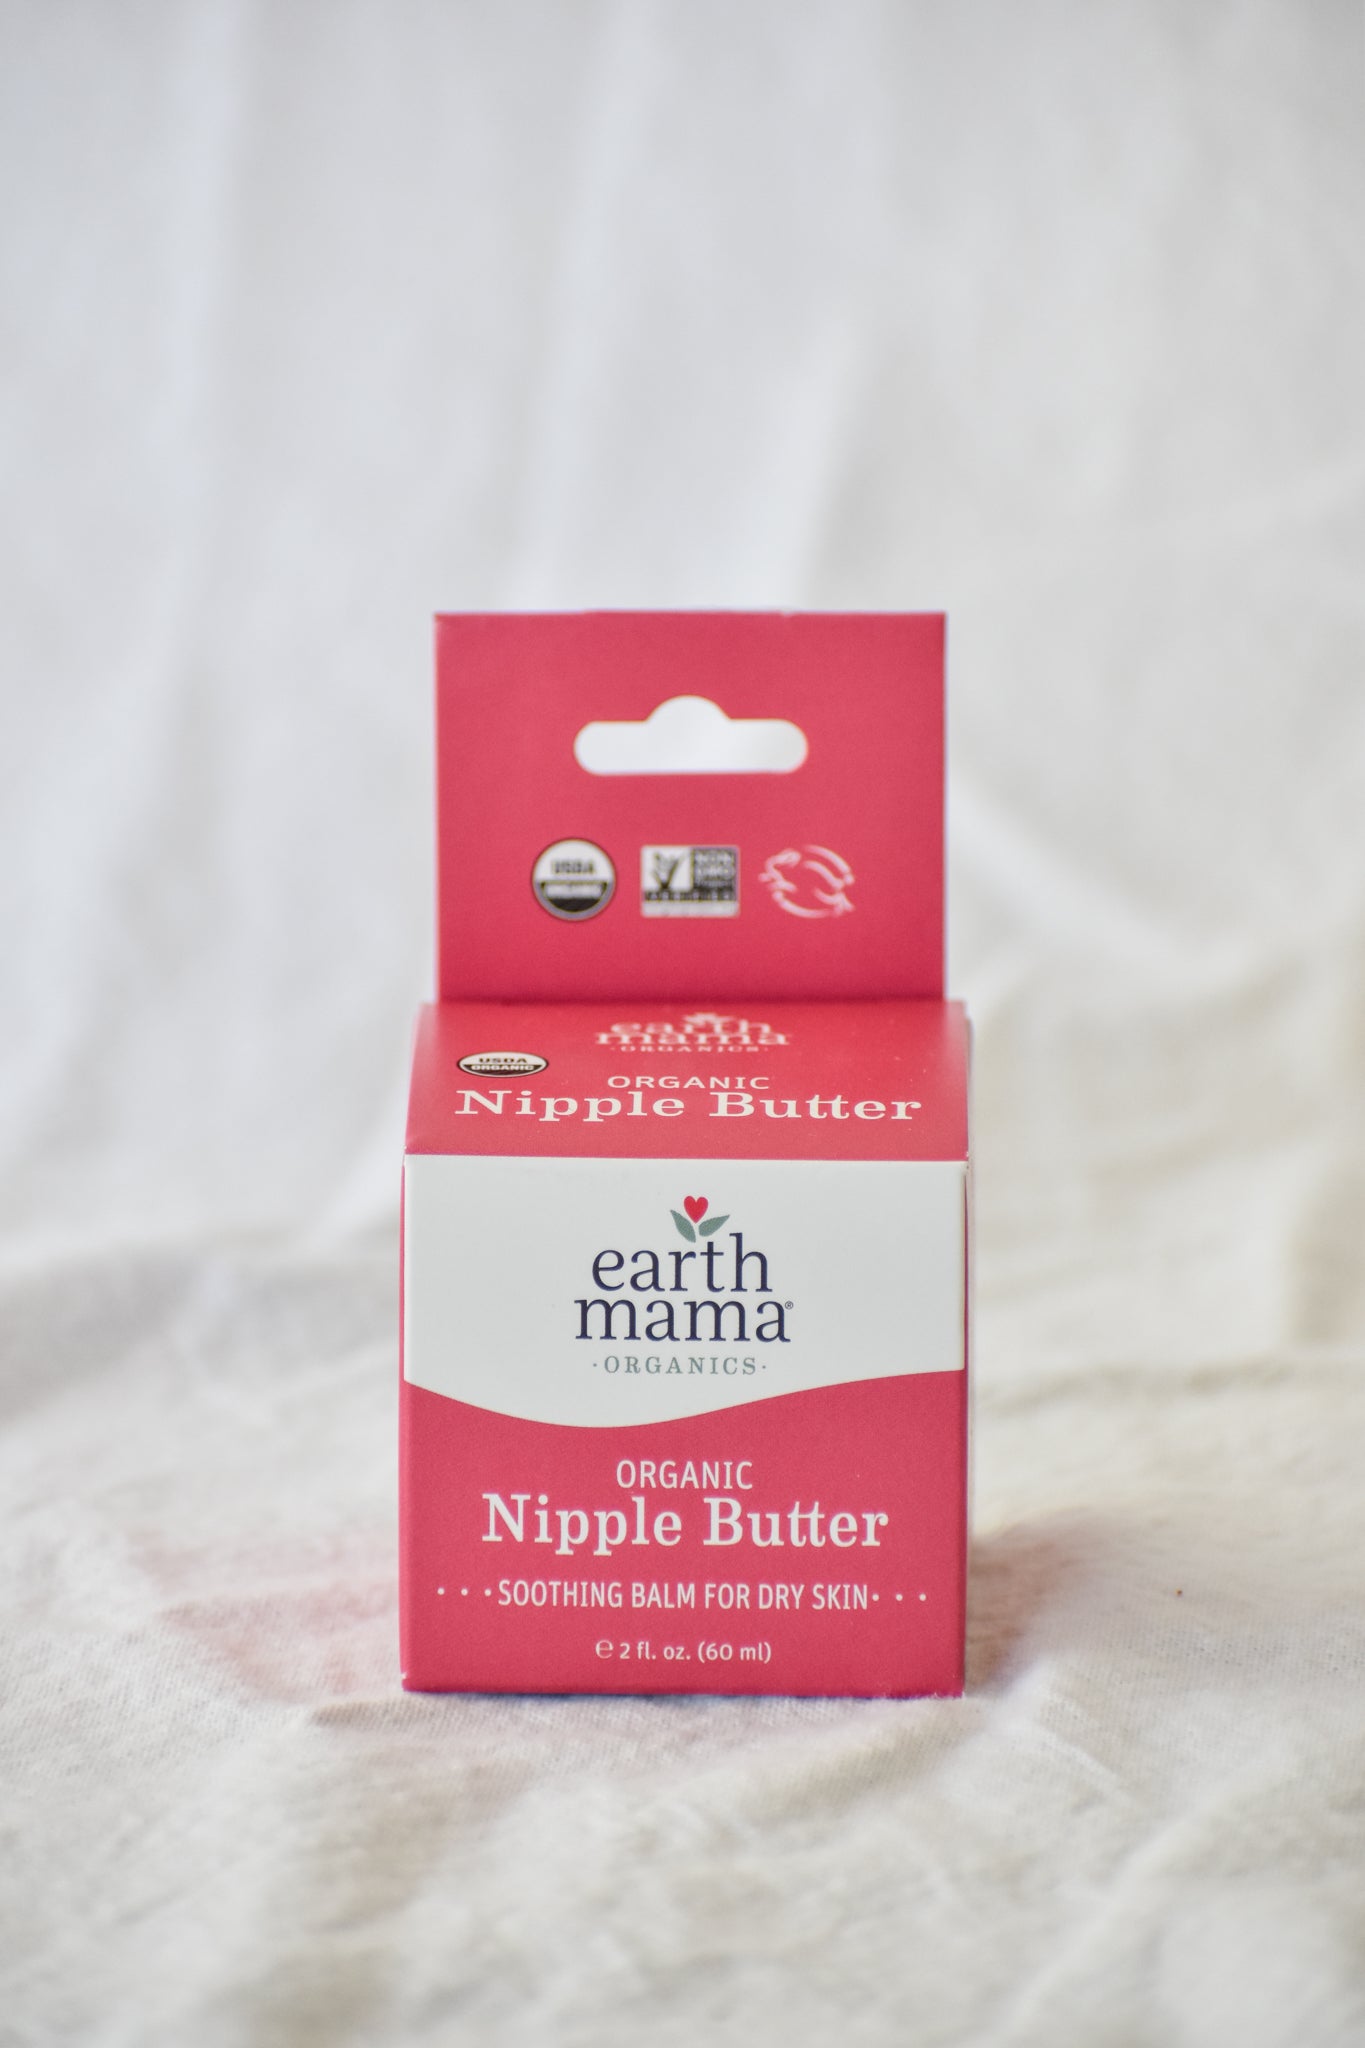  Earth Mama Vegan Nipple Butter